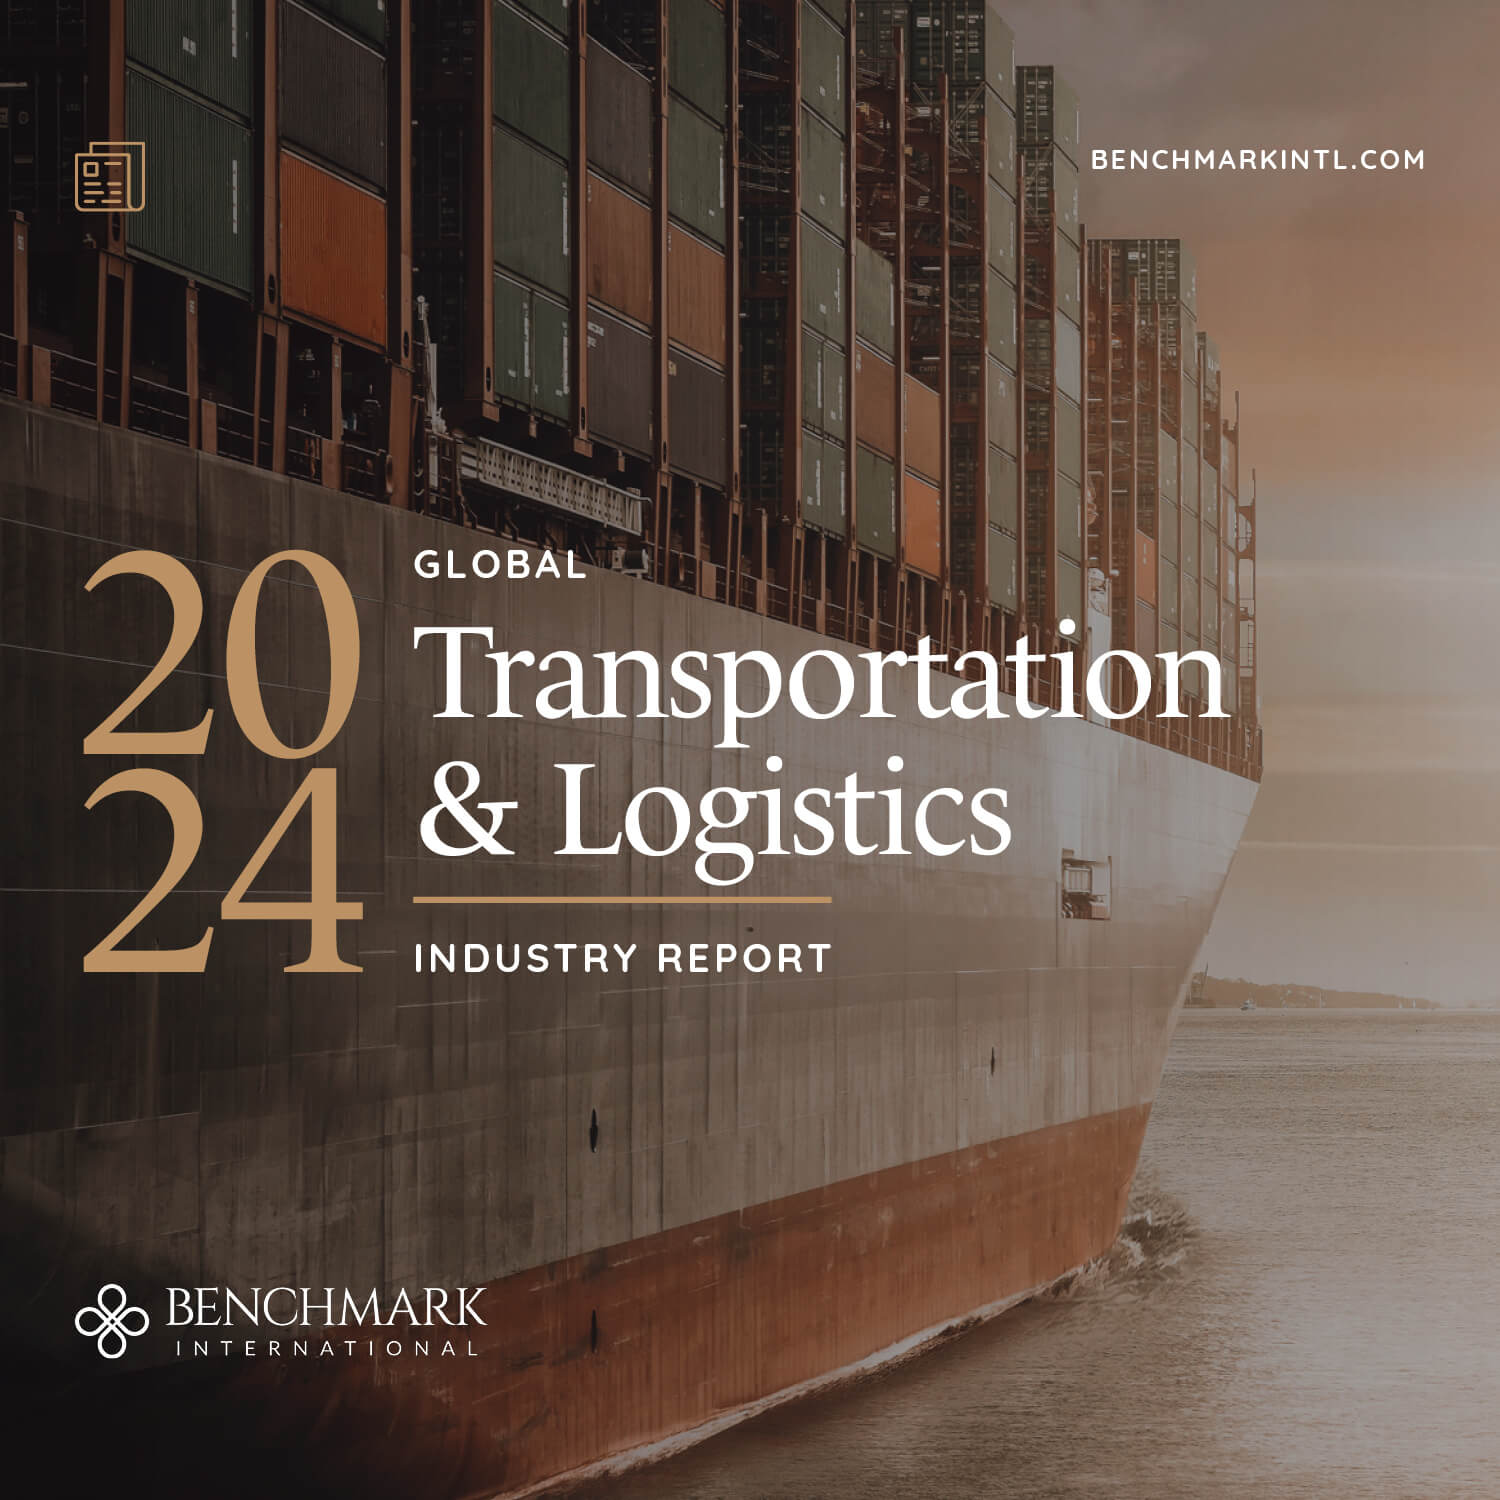 MRKTG_Social_Blog_Mobile_Industry_Report_Transportation_&_Logistics